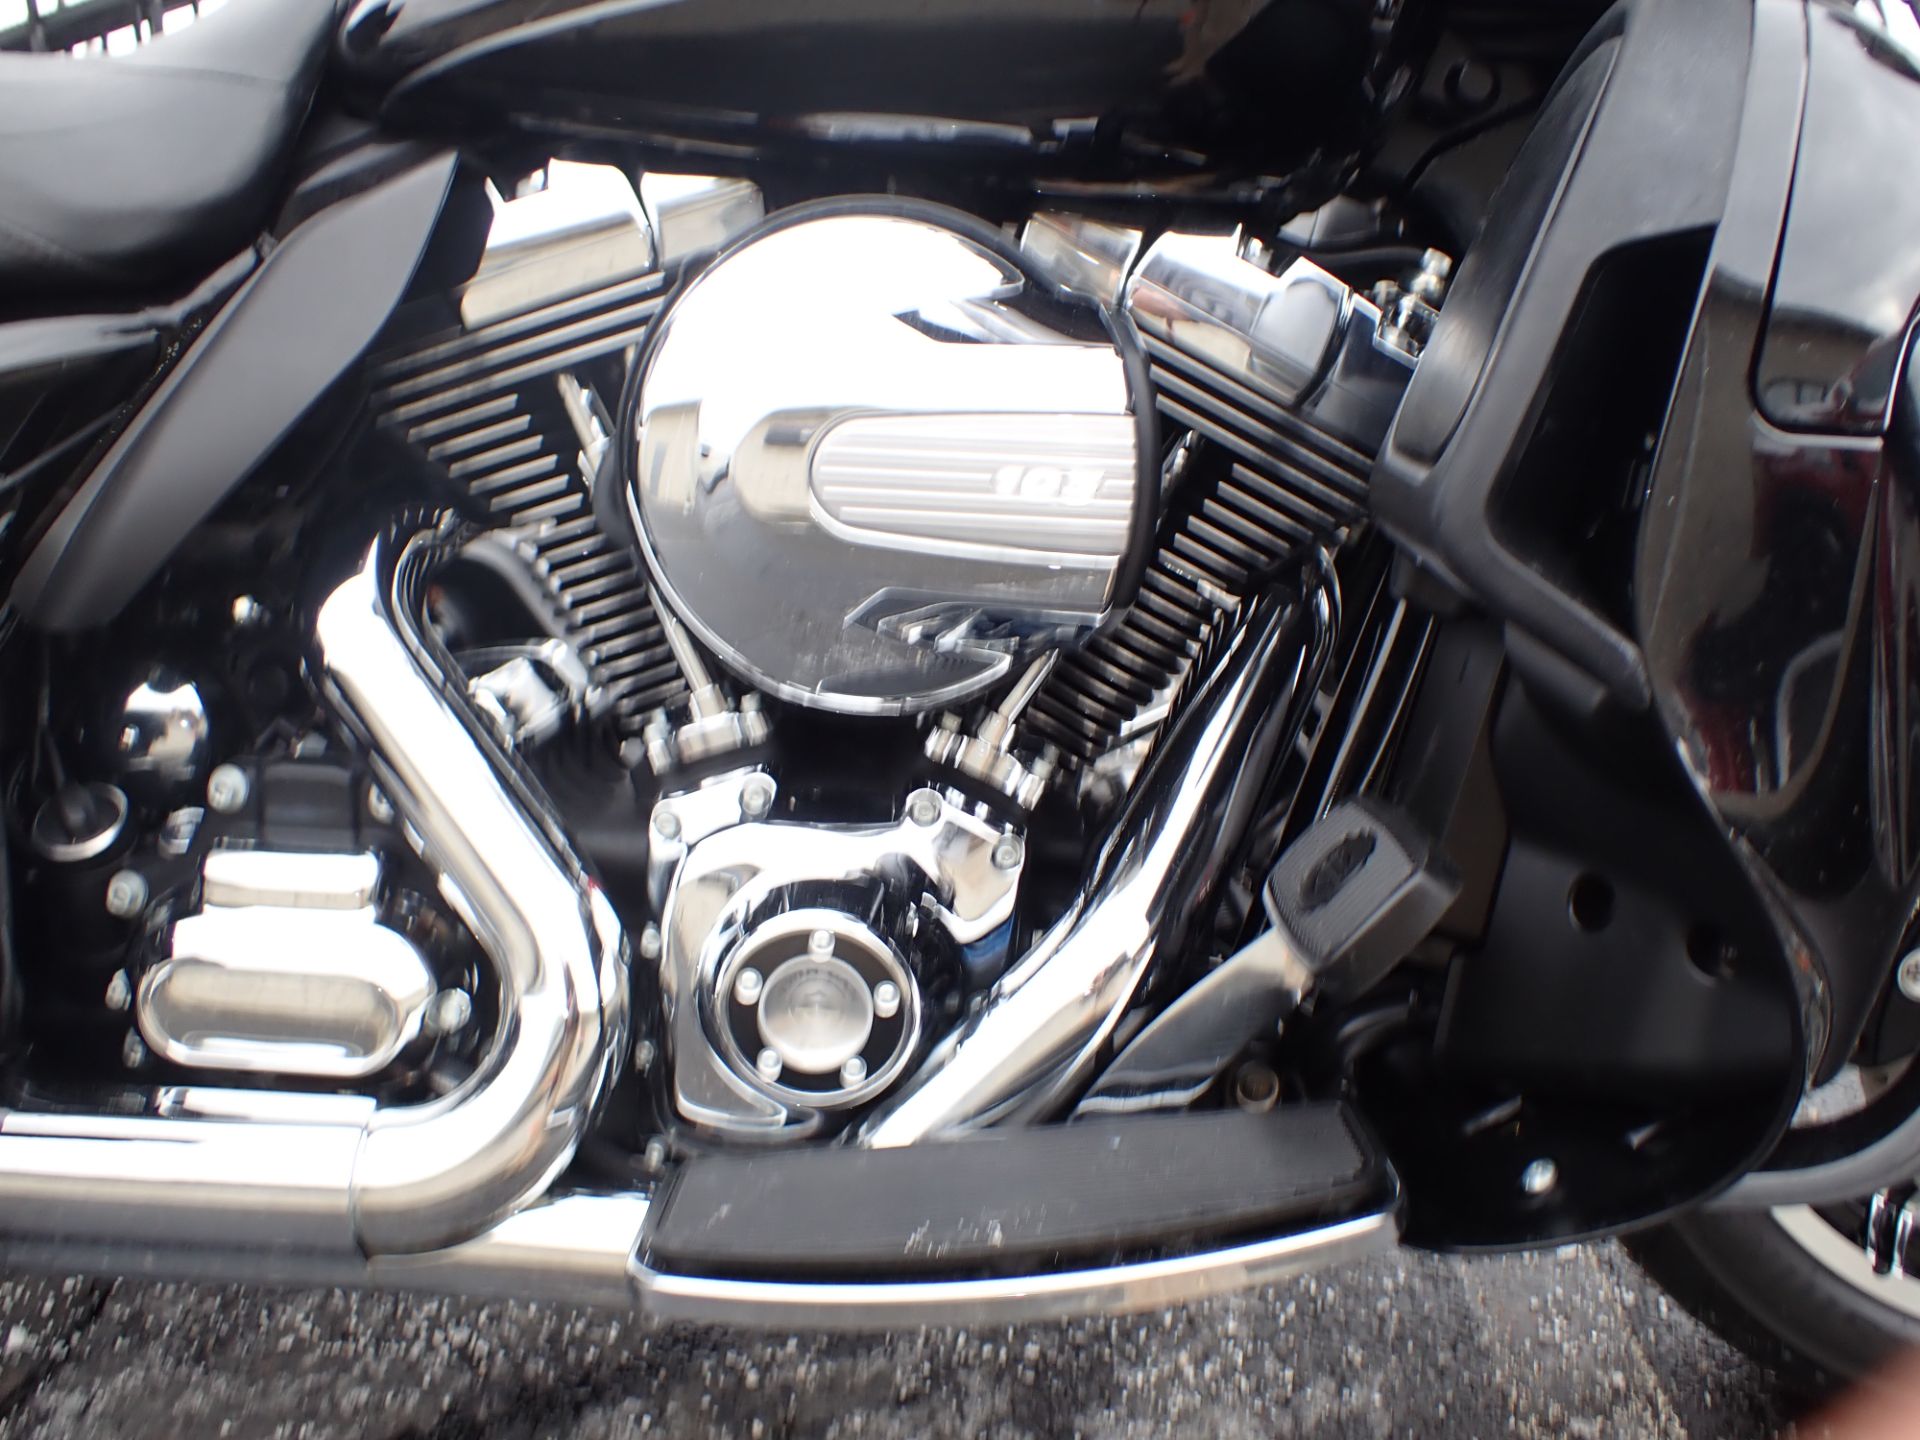 2014 Harley-Davidson Ultra Limited in Massillon, Ohio - Photo 4